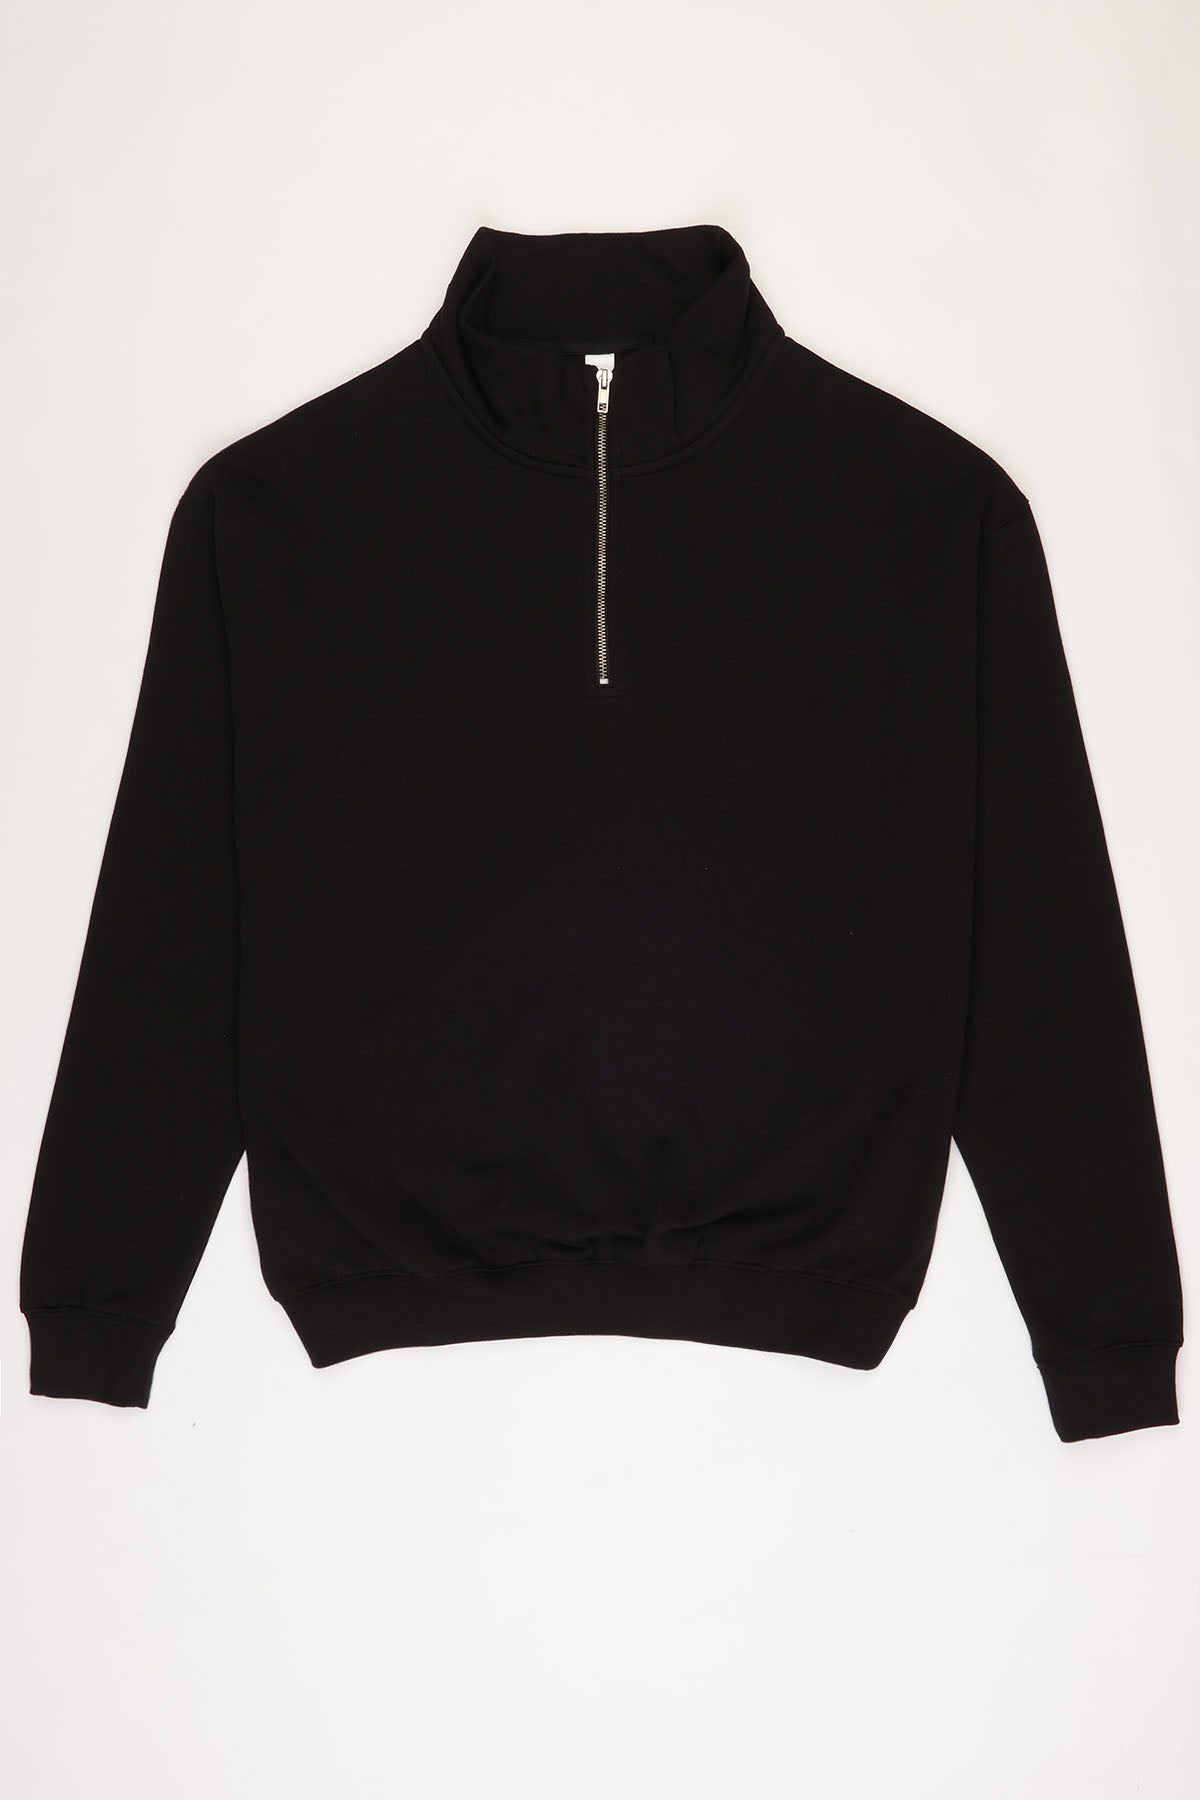 1/4 Zip LSF Fleece Tracksuit in Black (Pack of 4)